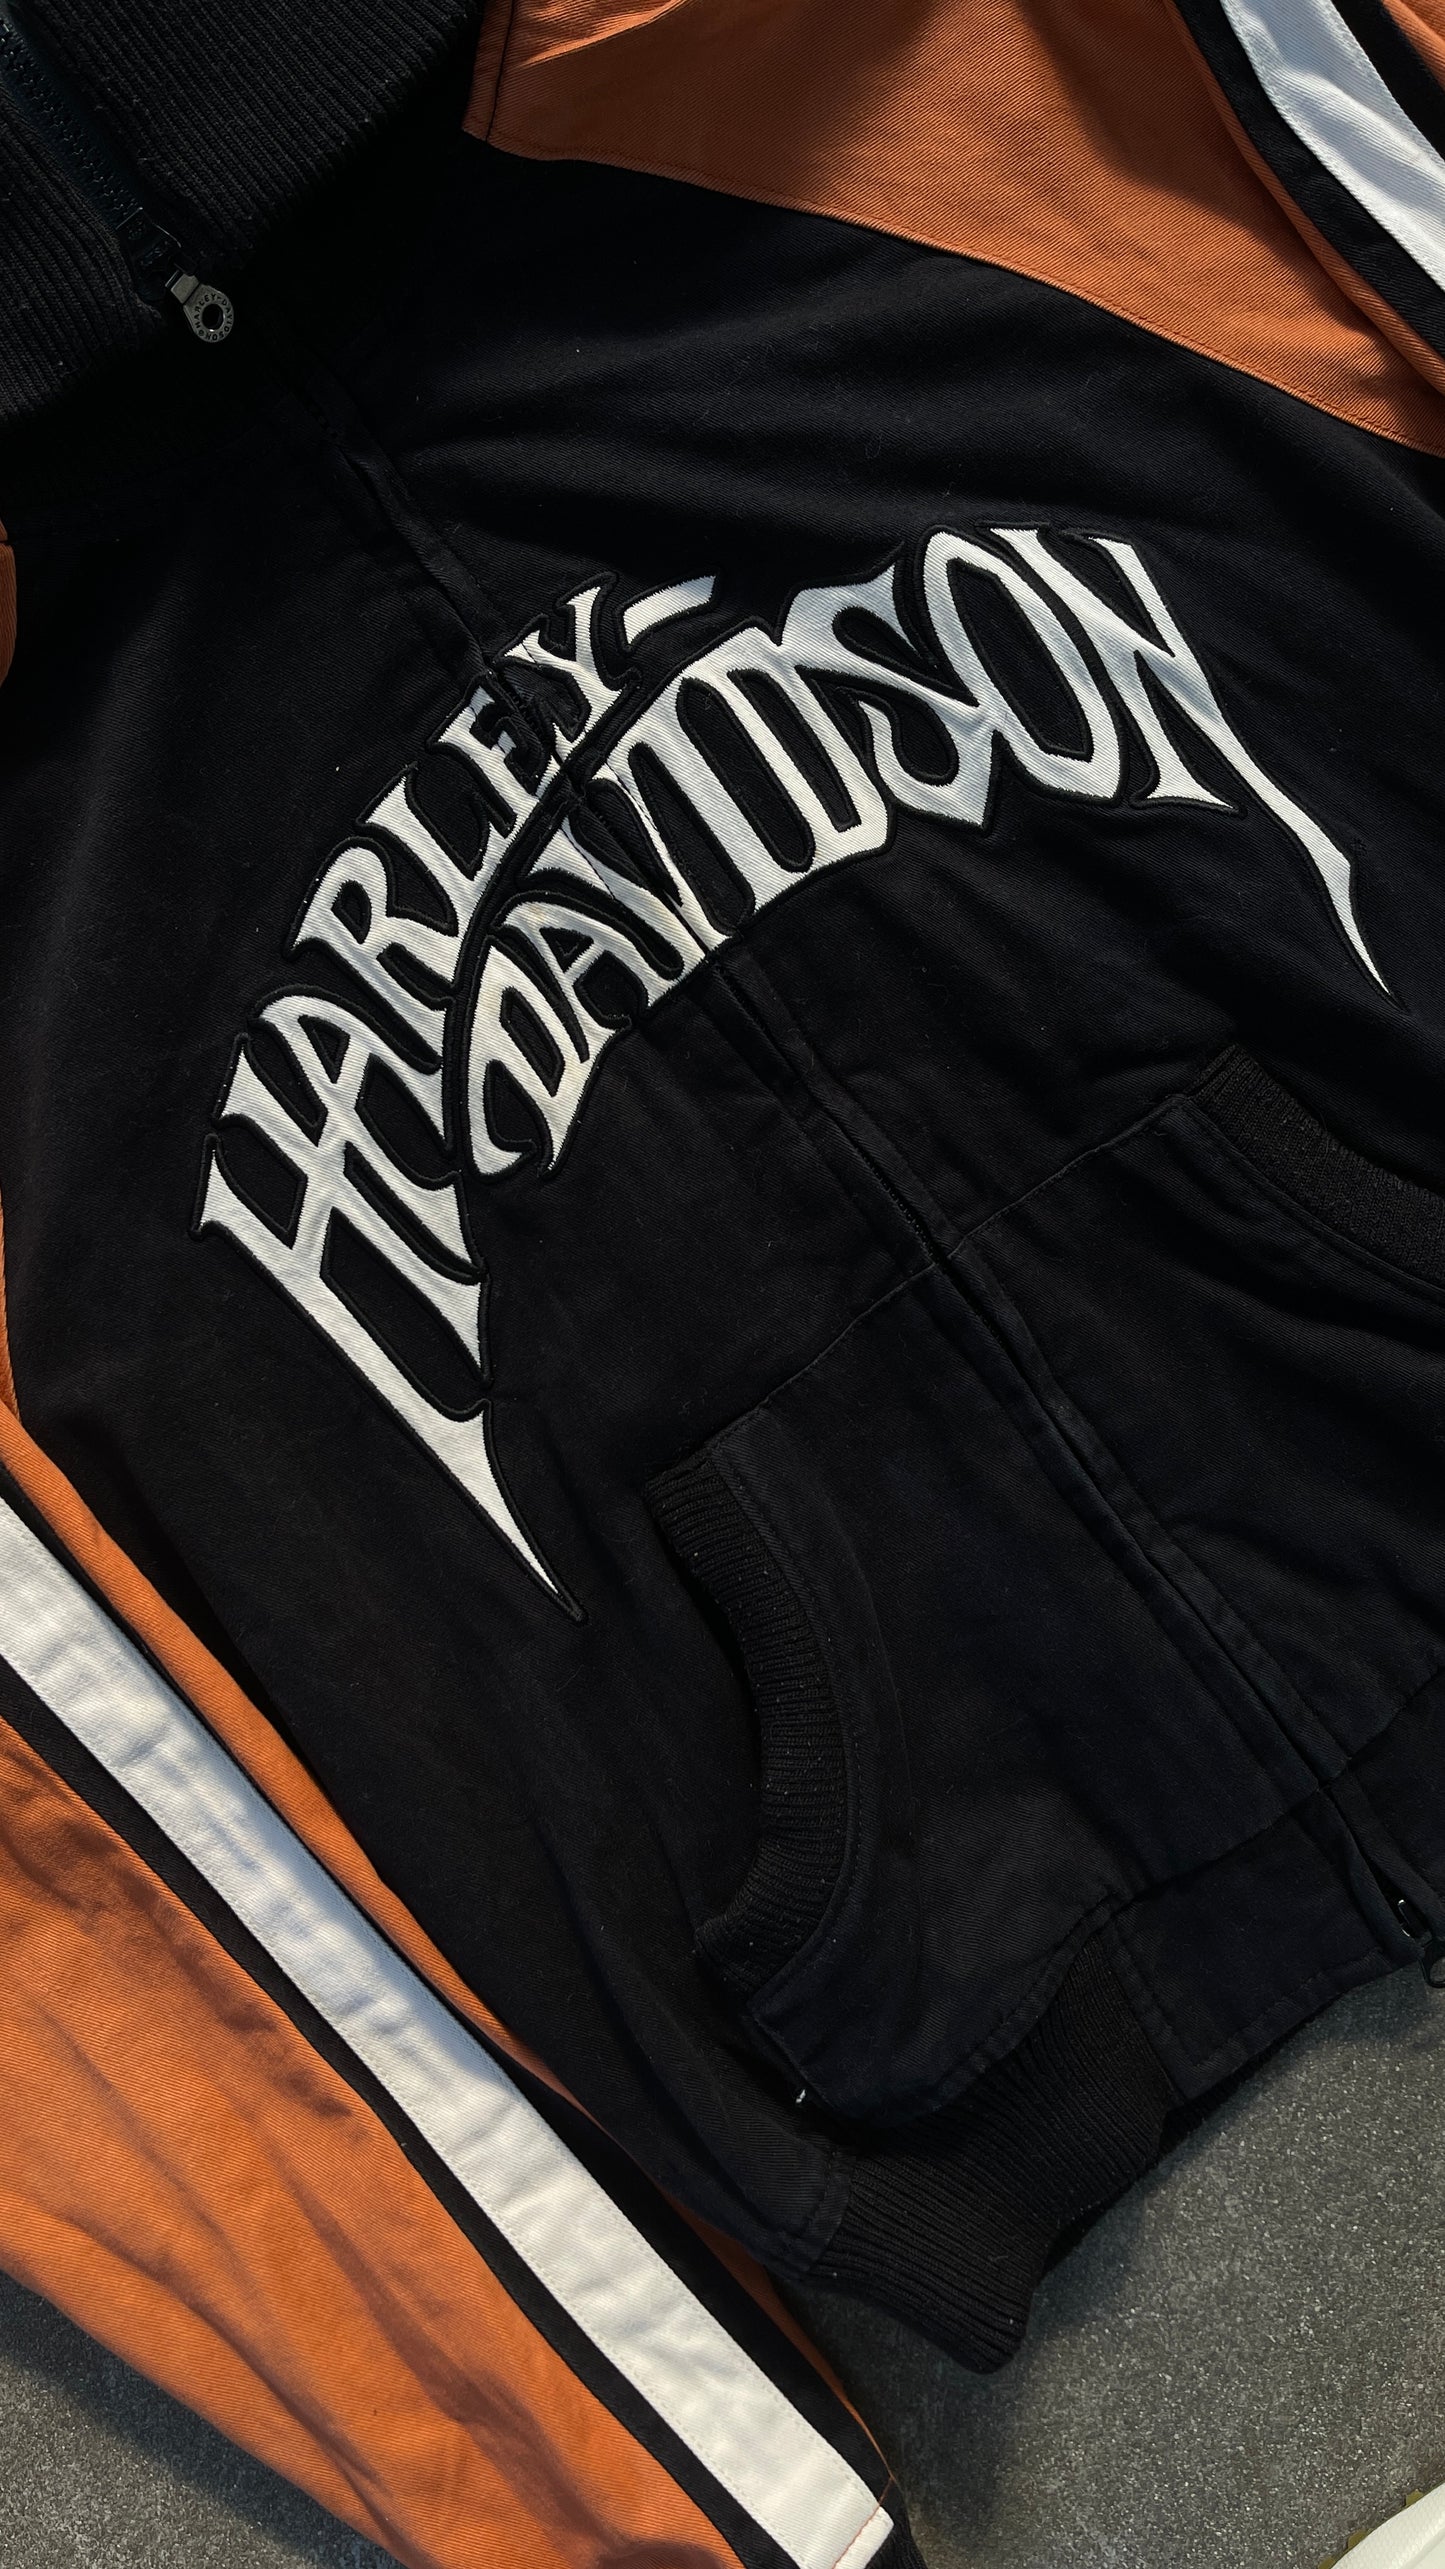 Harley Davidson Jacket  Size: Small